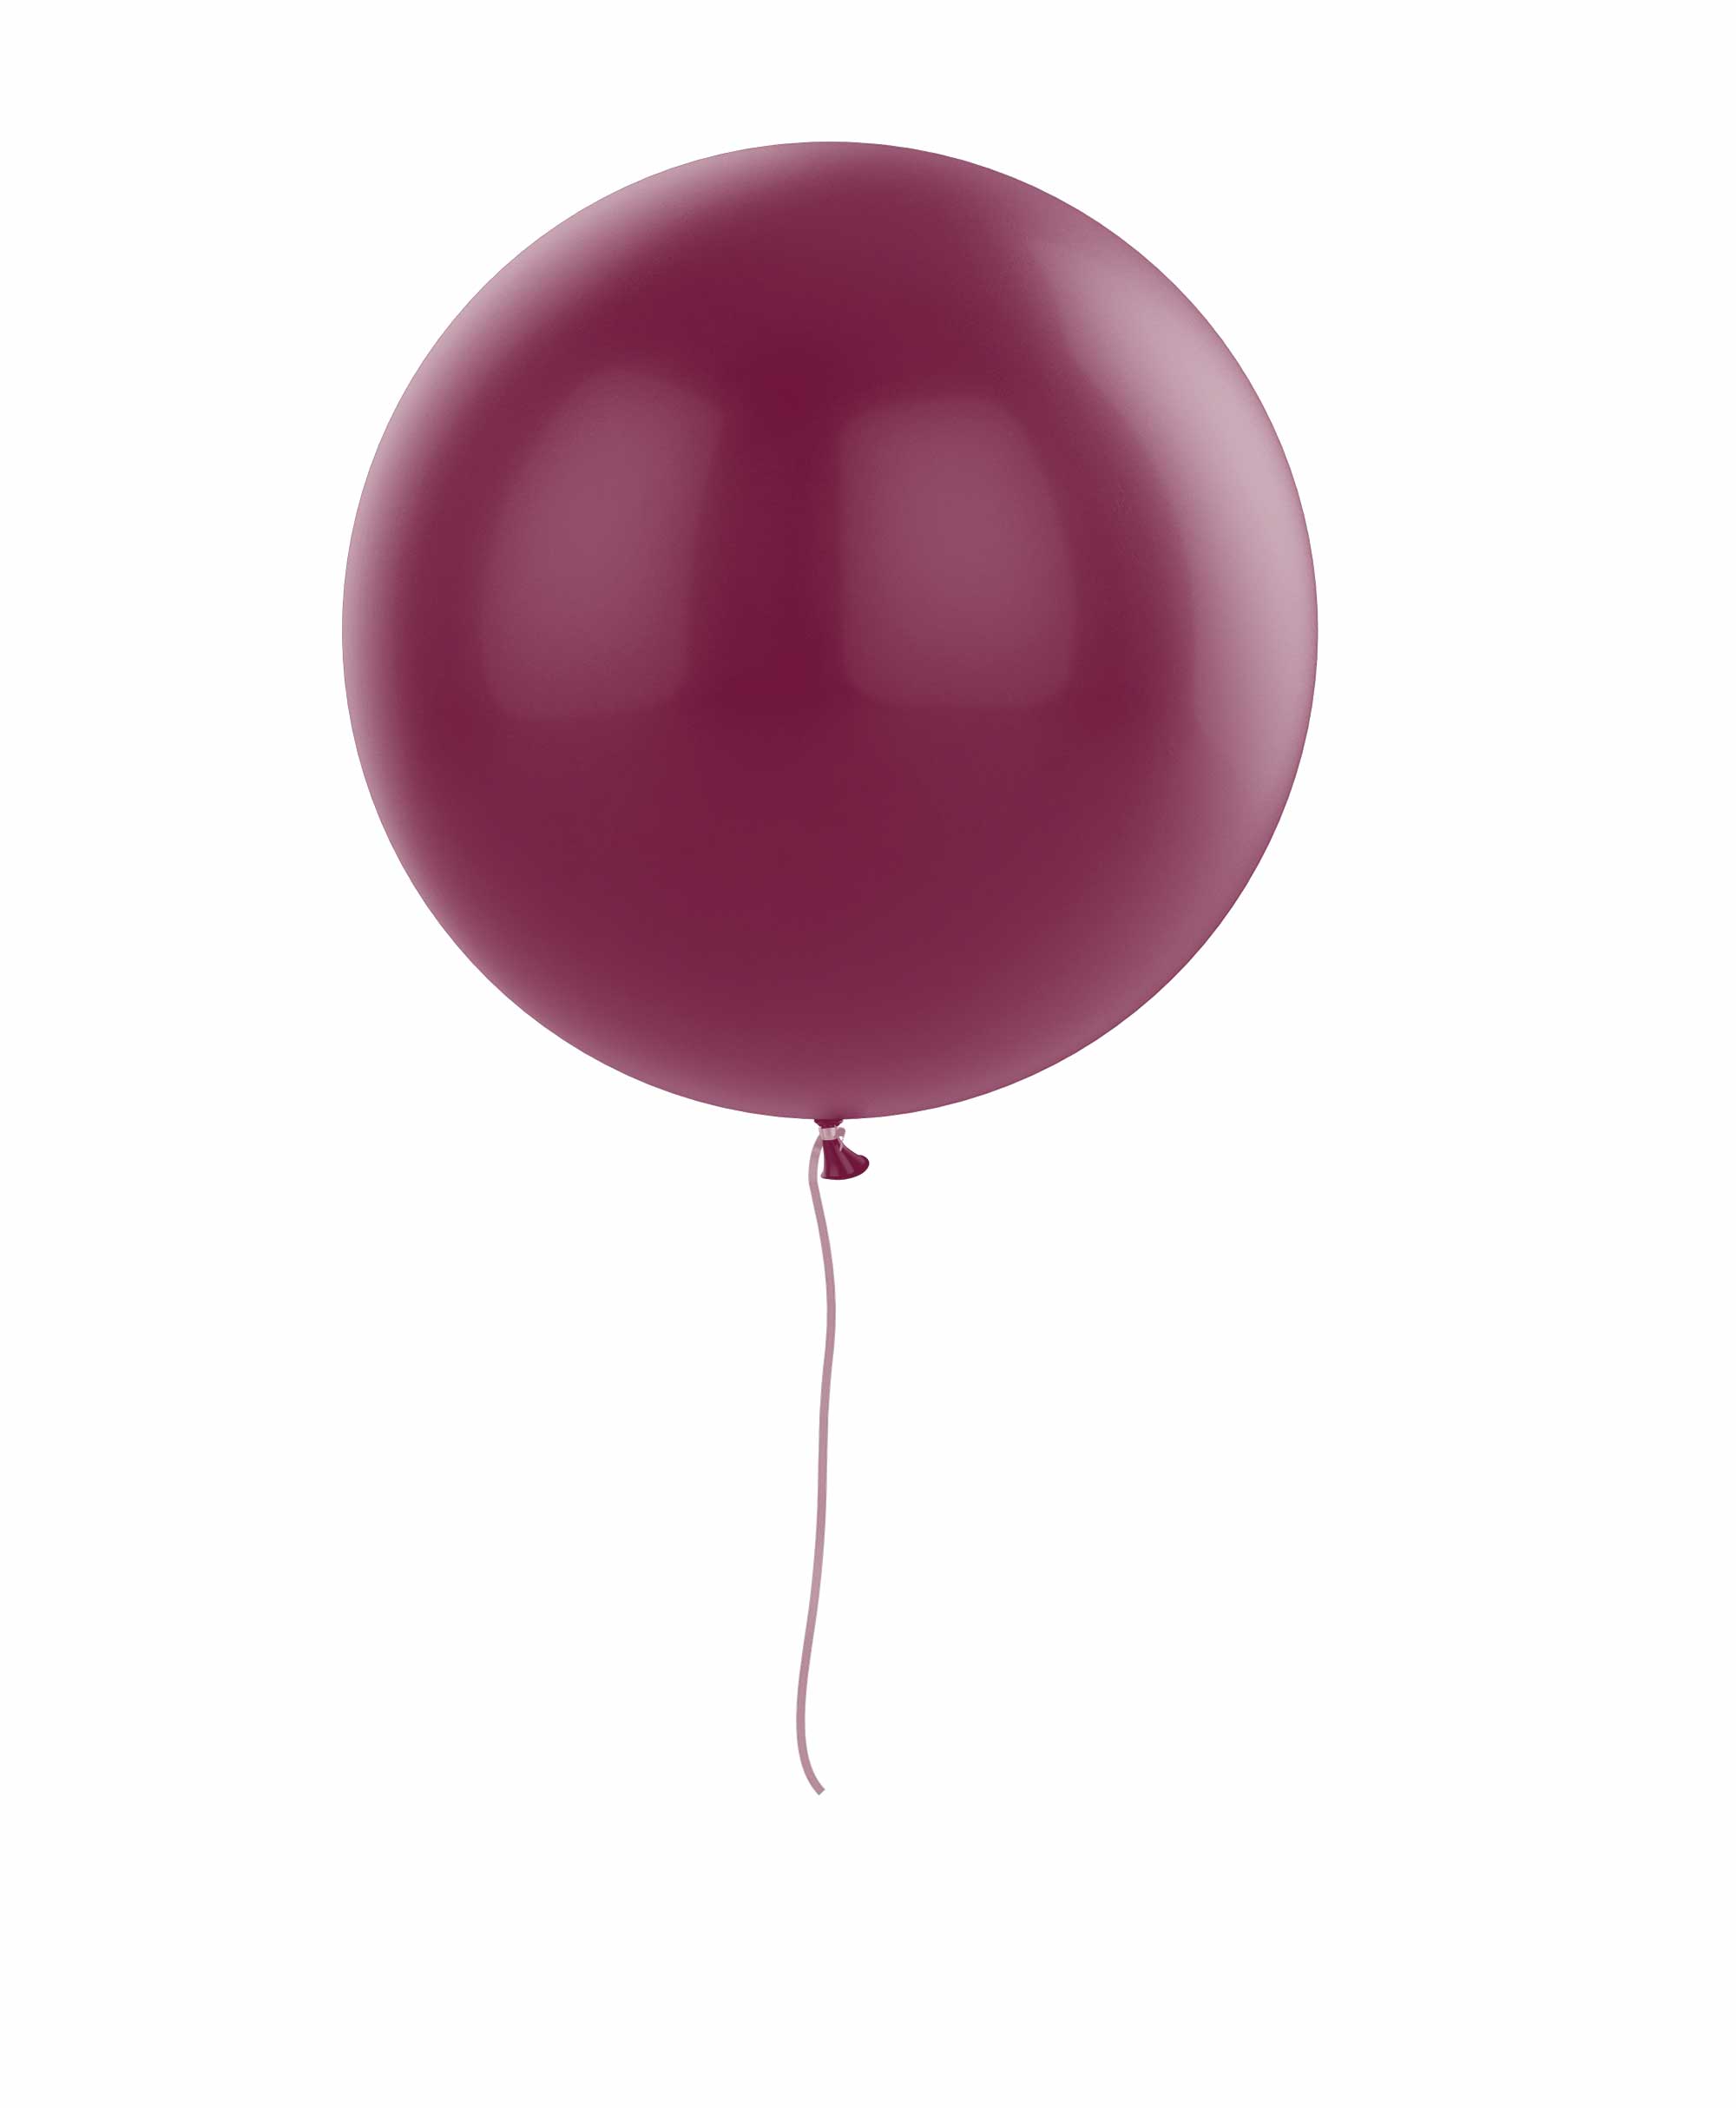 Burgundy balloon 36" - Swan theme